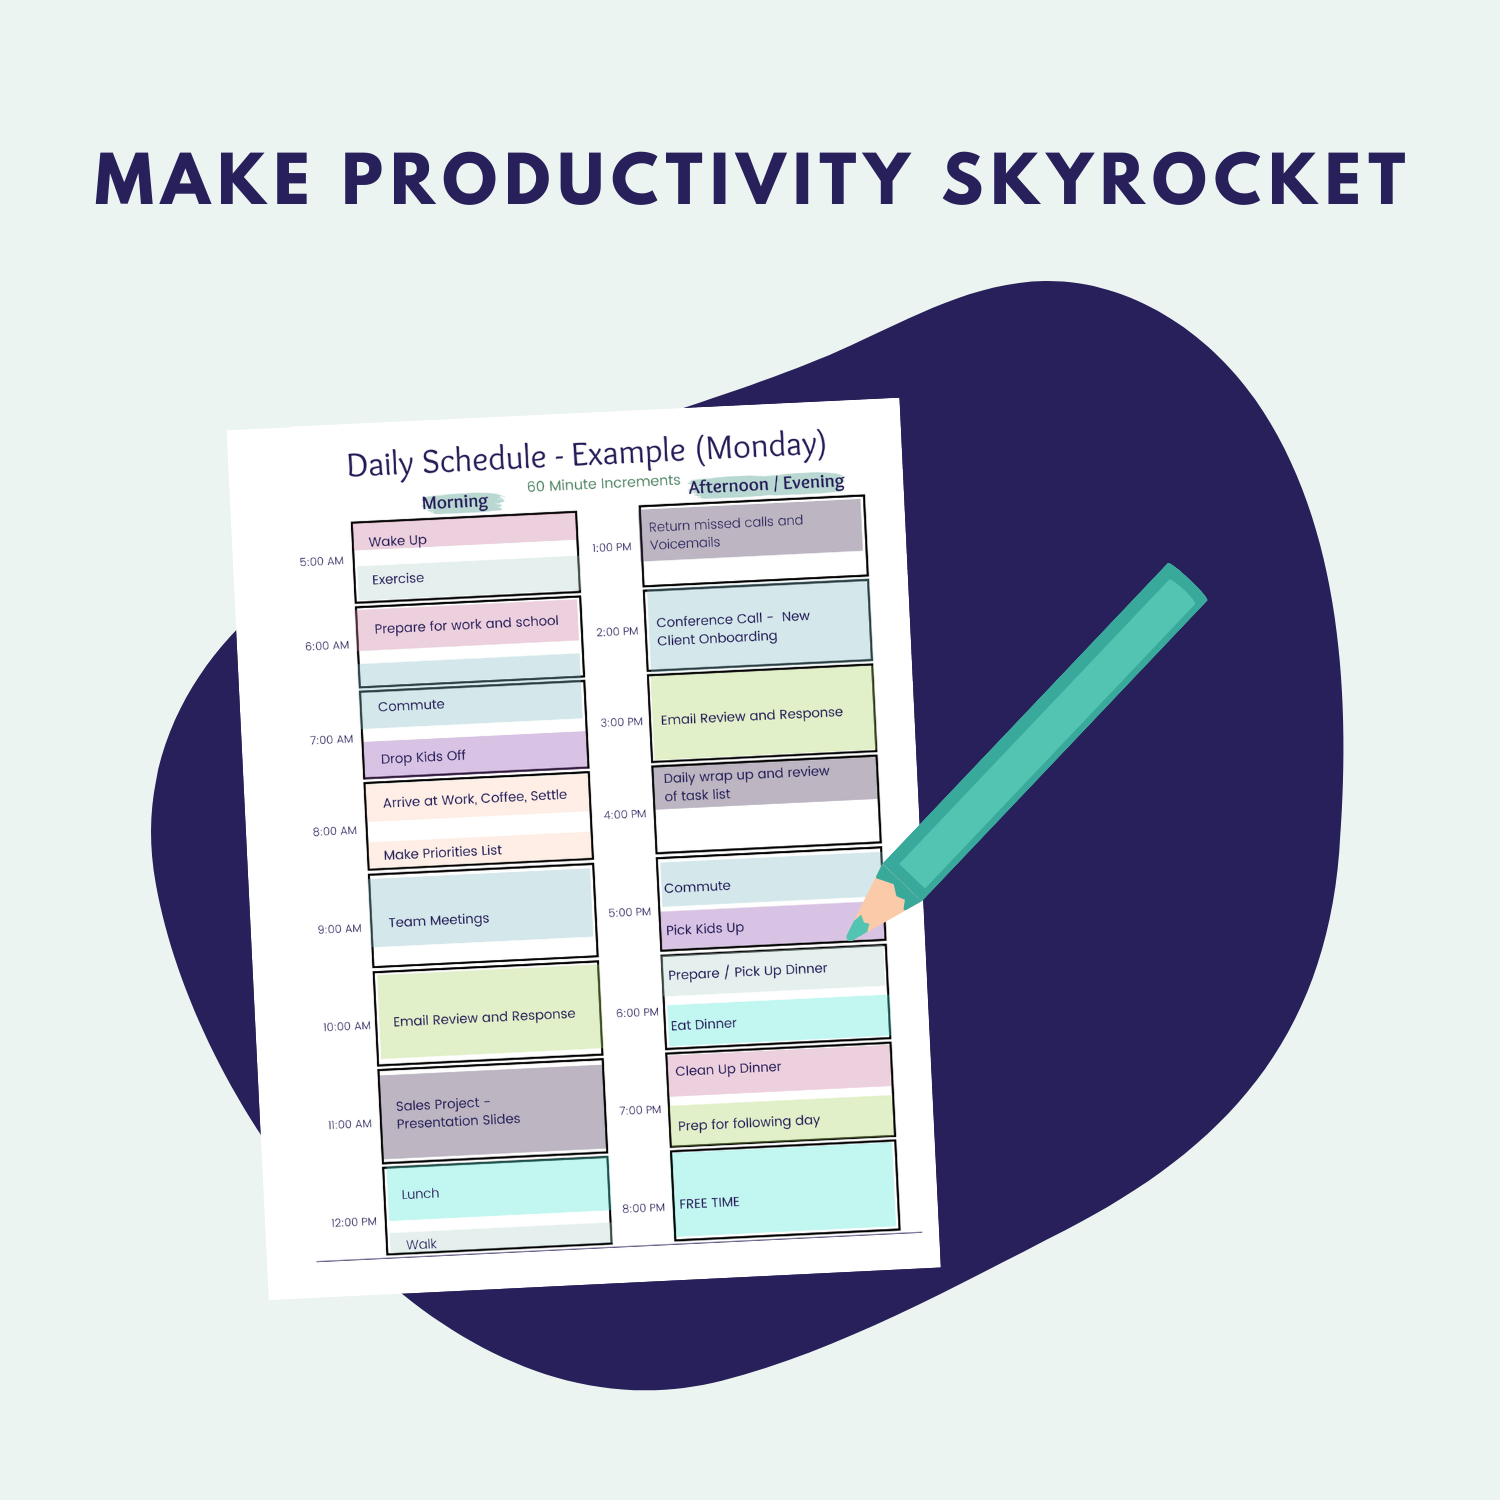 Time Blocking Productivity Method Workbook